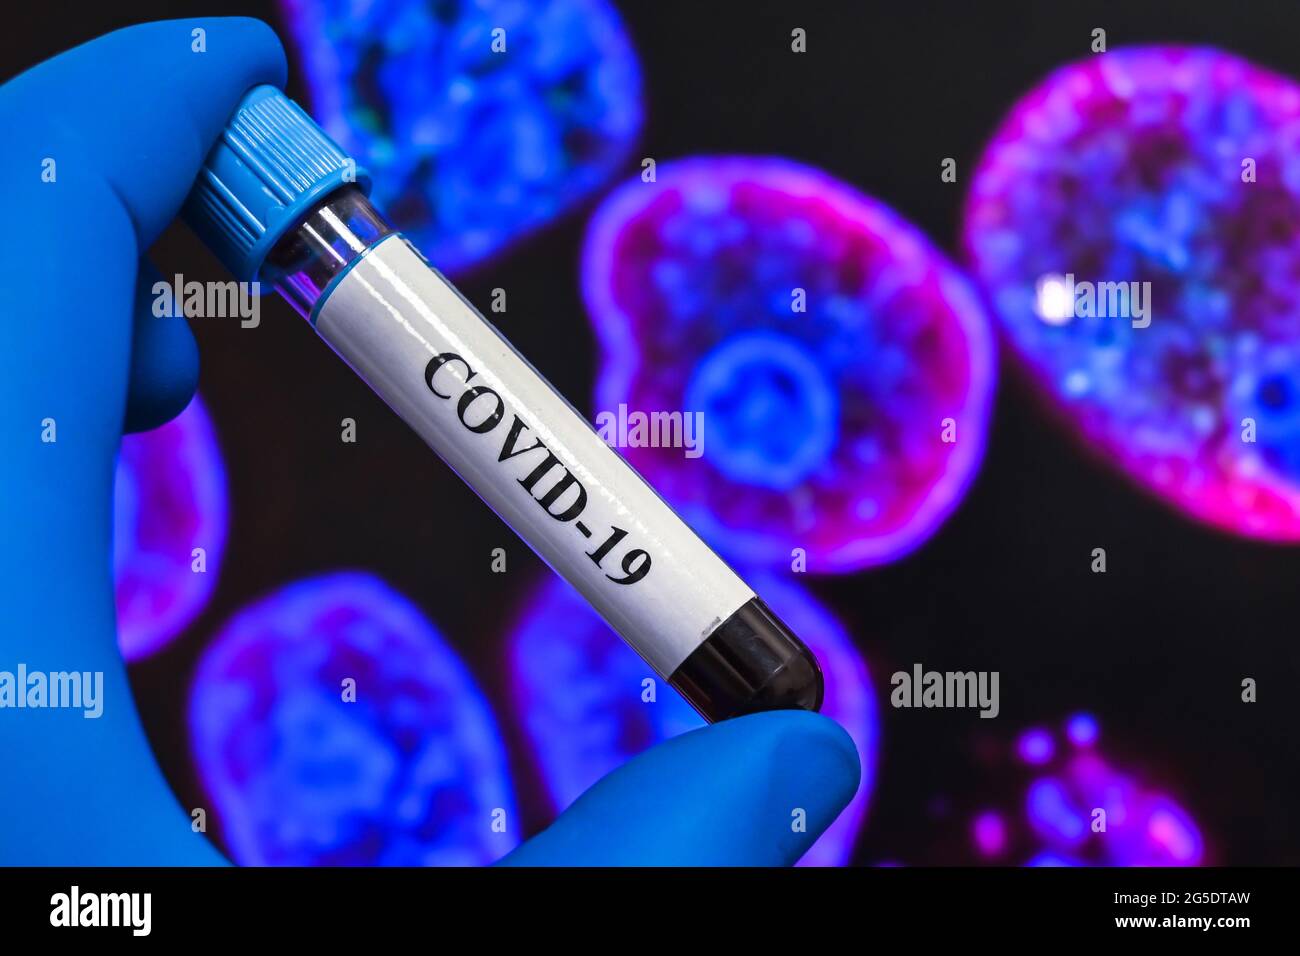 Coronavirus research. Laboratory study of the virus - the causative agent of COVID-19. Stock Photo